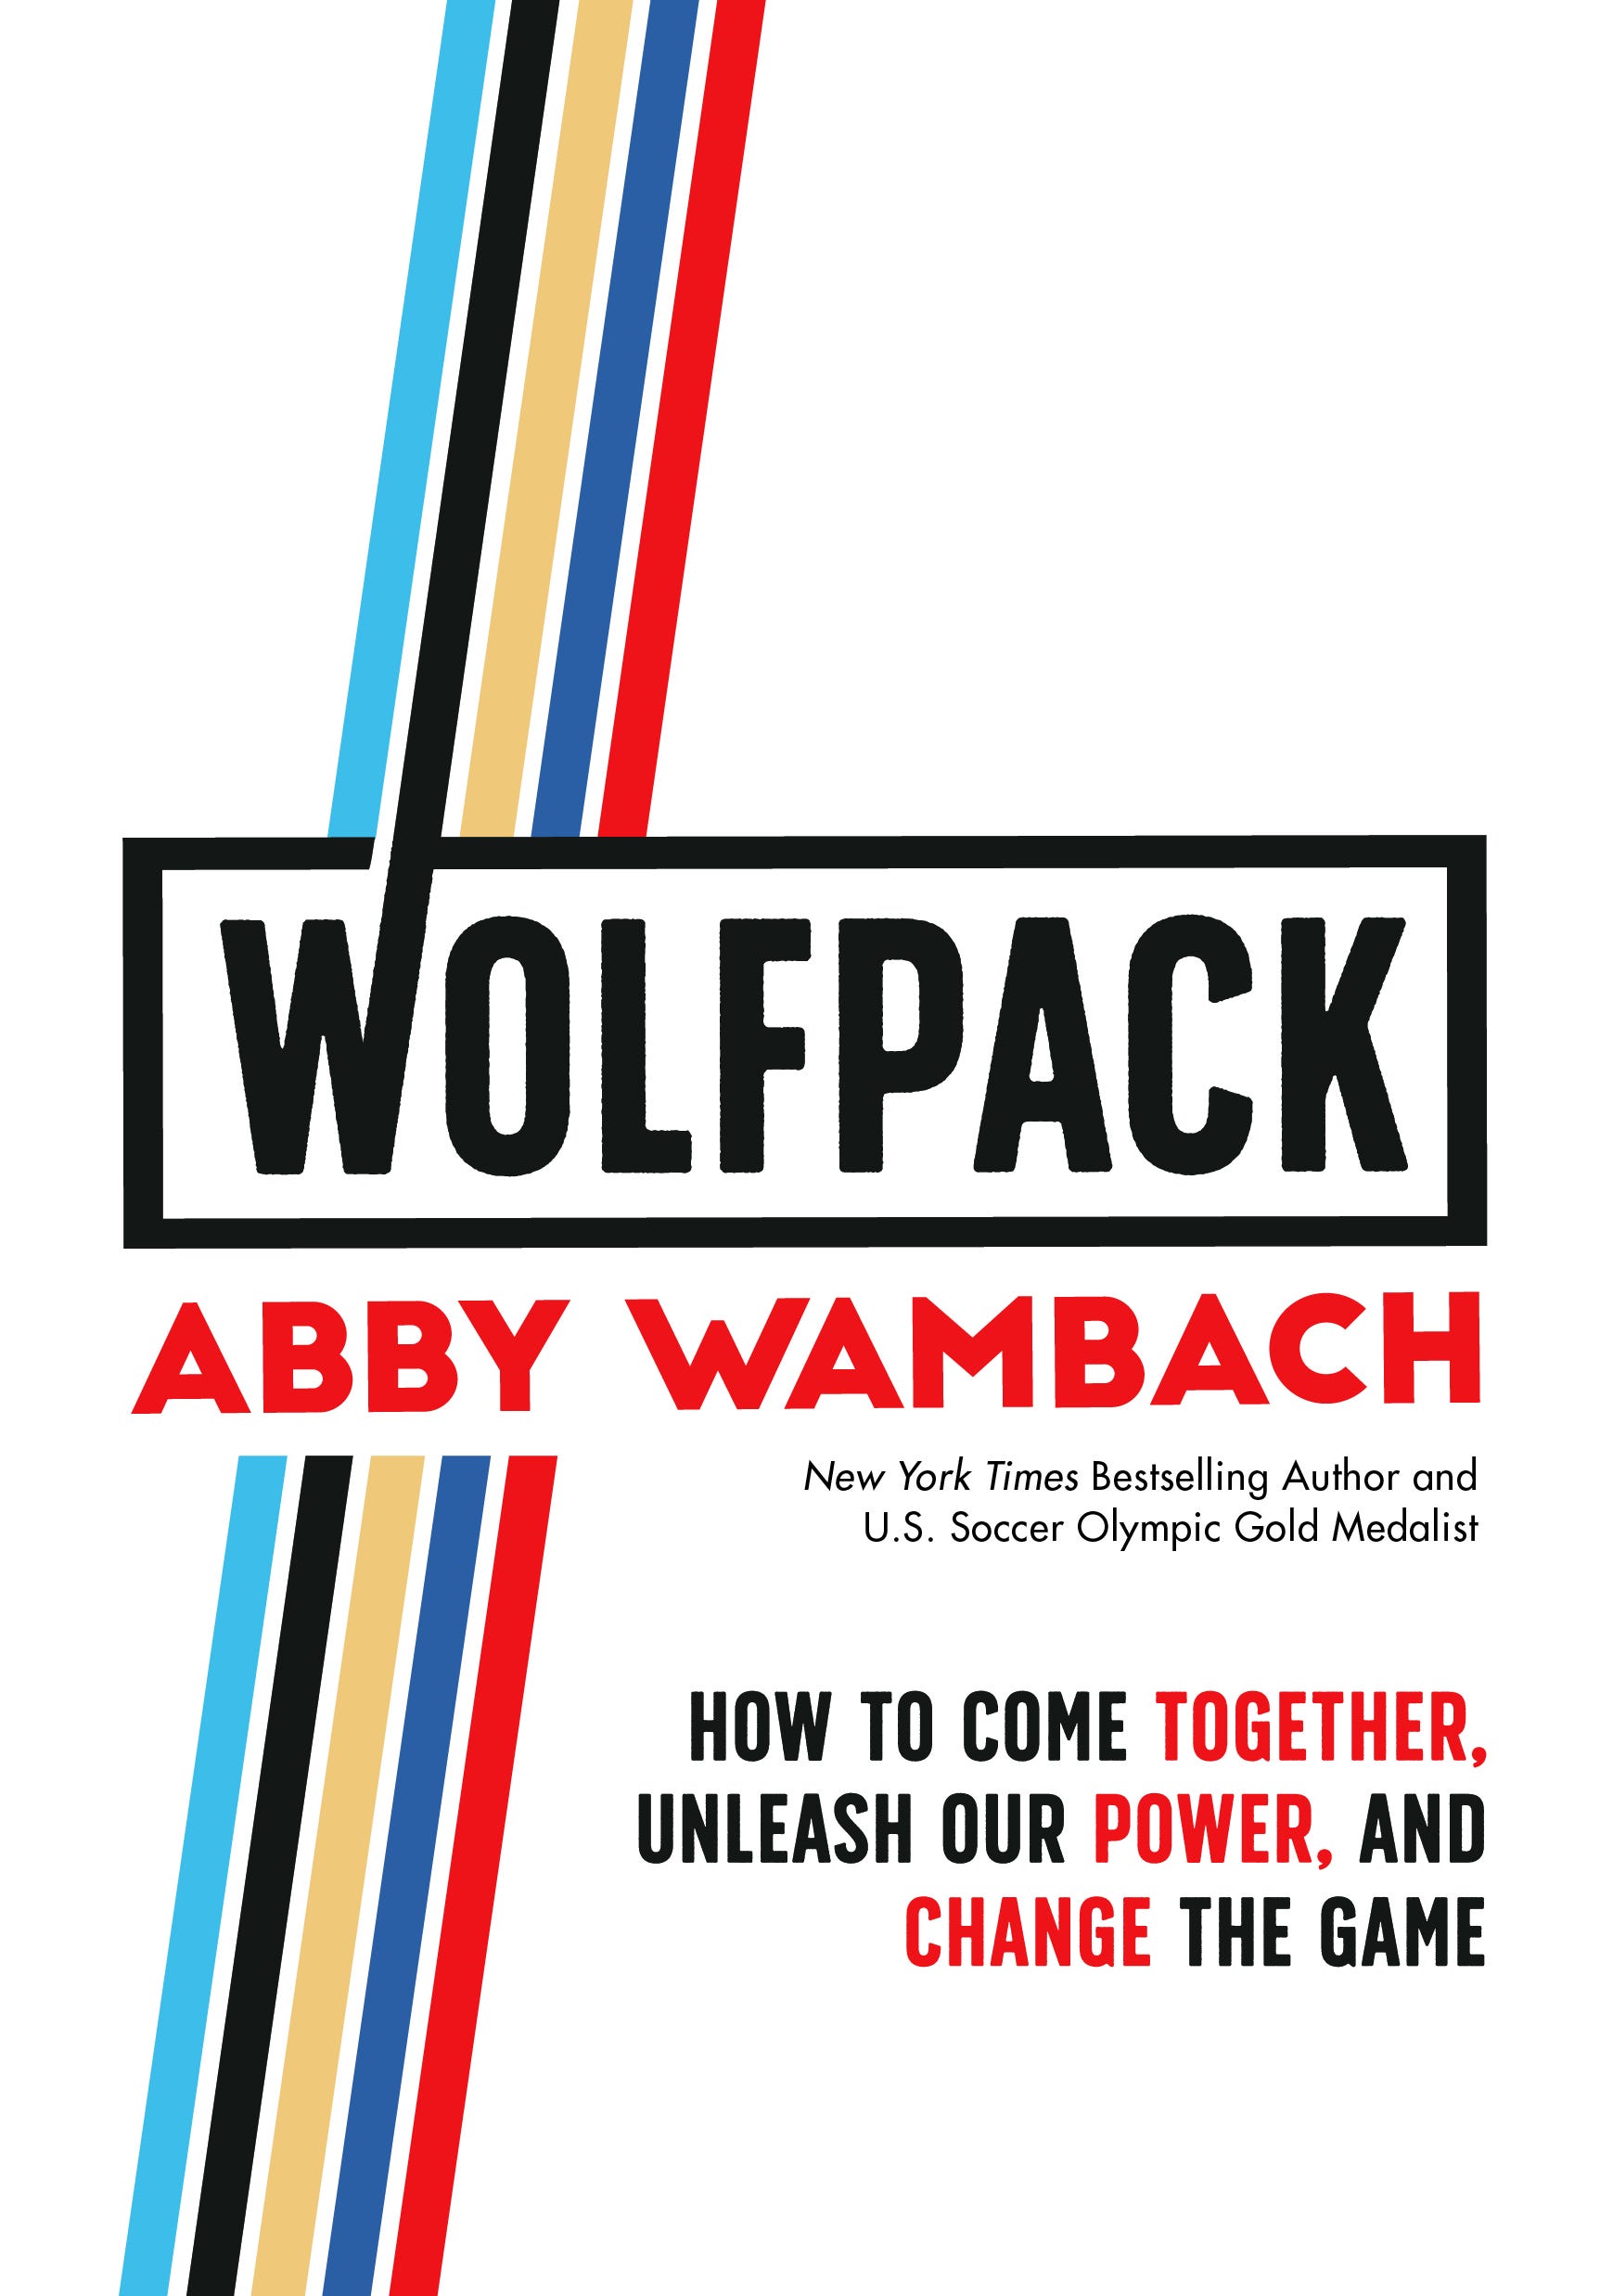 abby wambach book forward